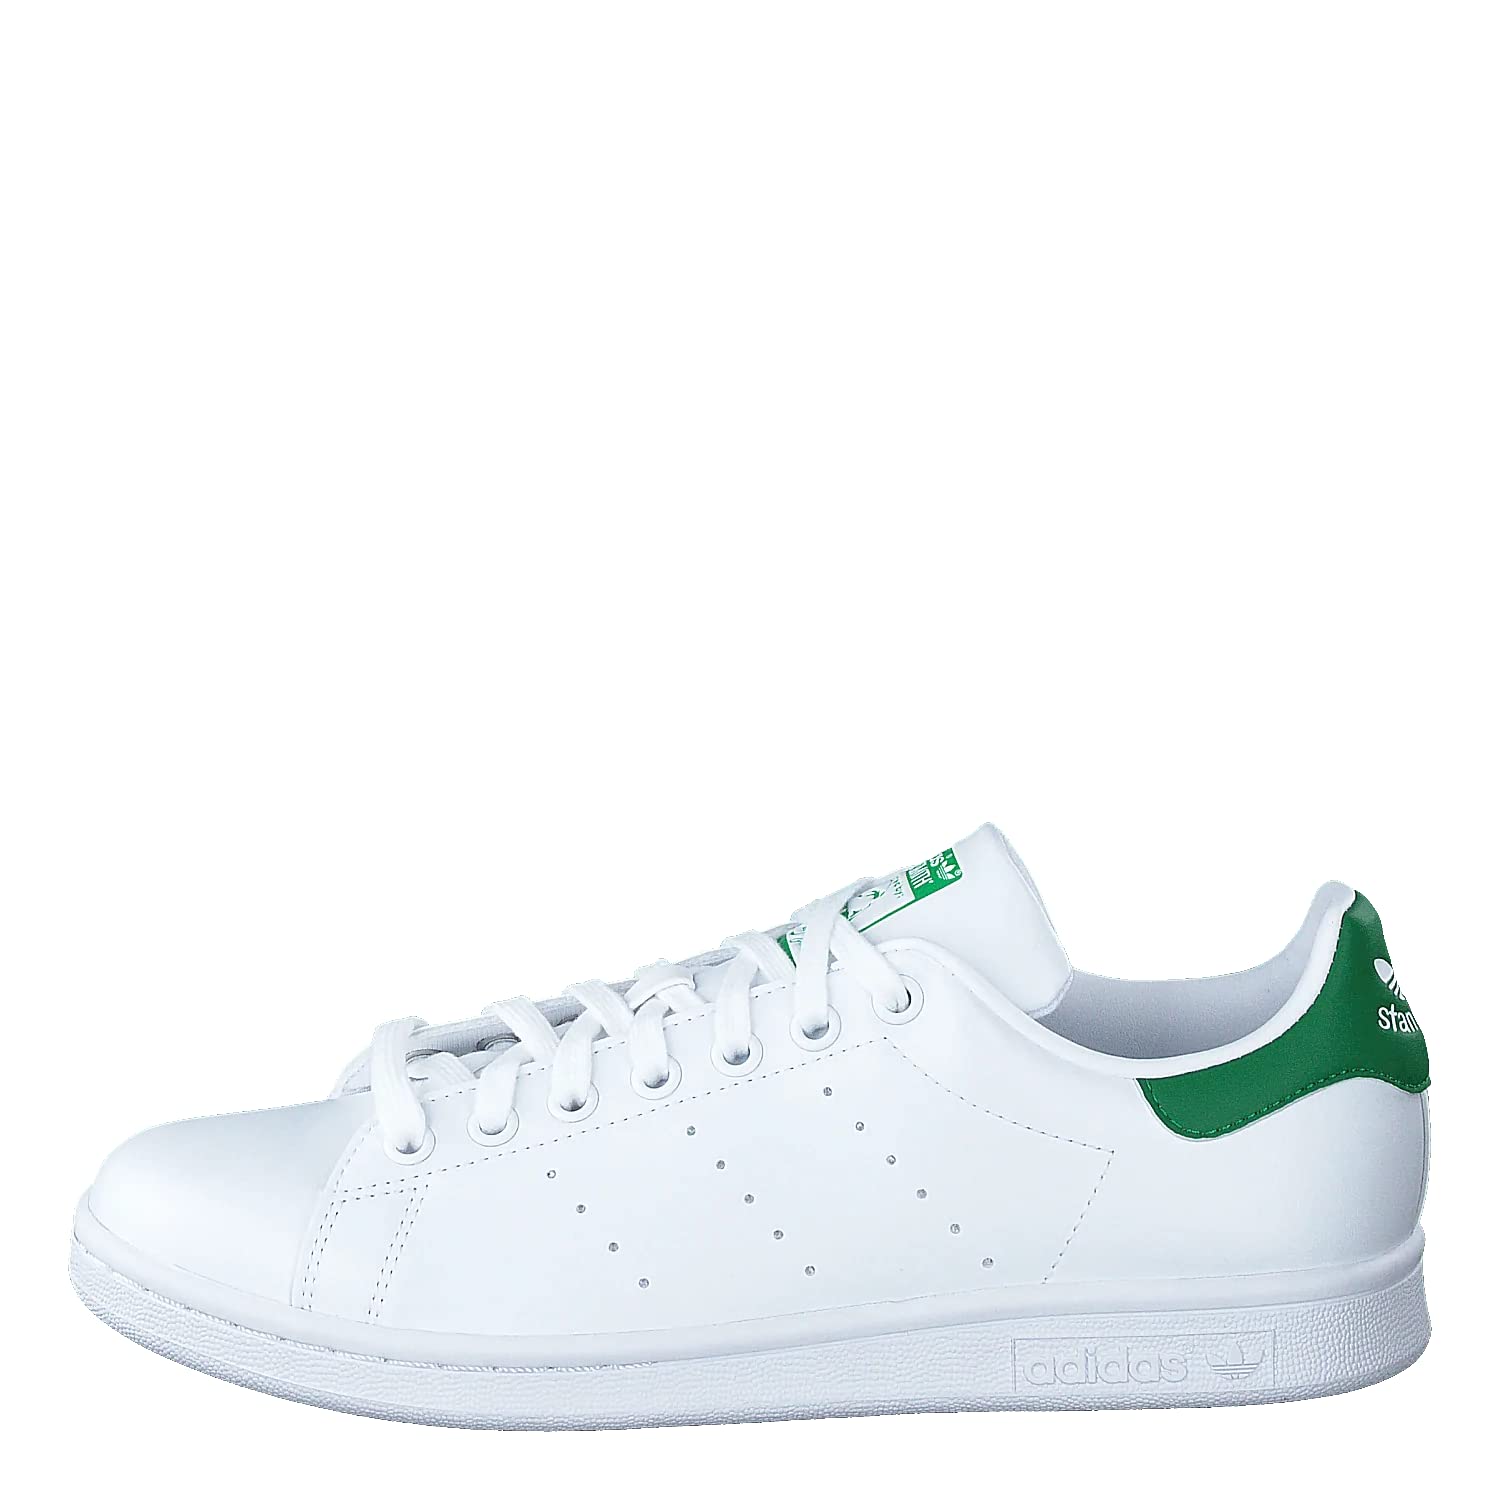 adidas originals Herren Sneakers, White, 44 EU